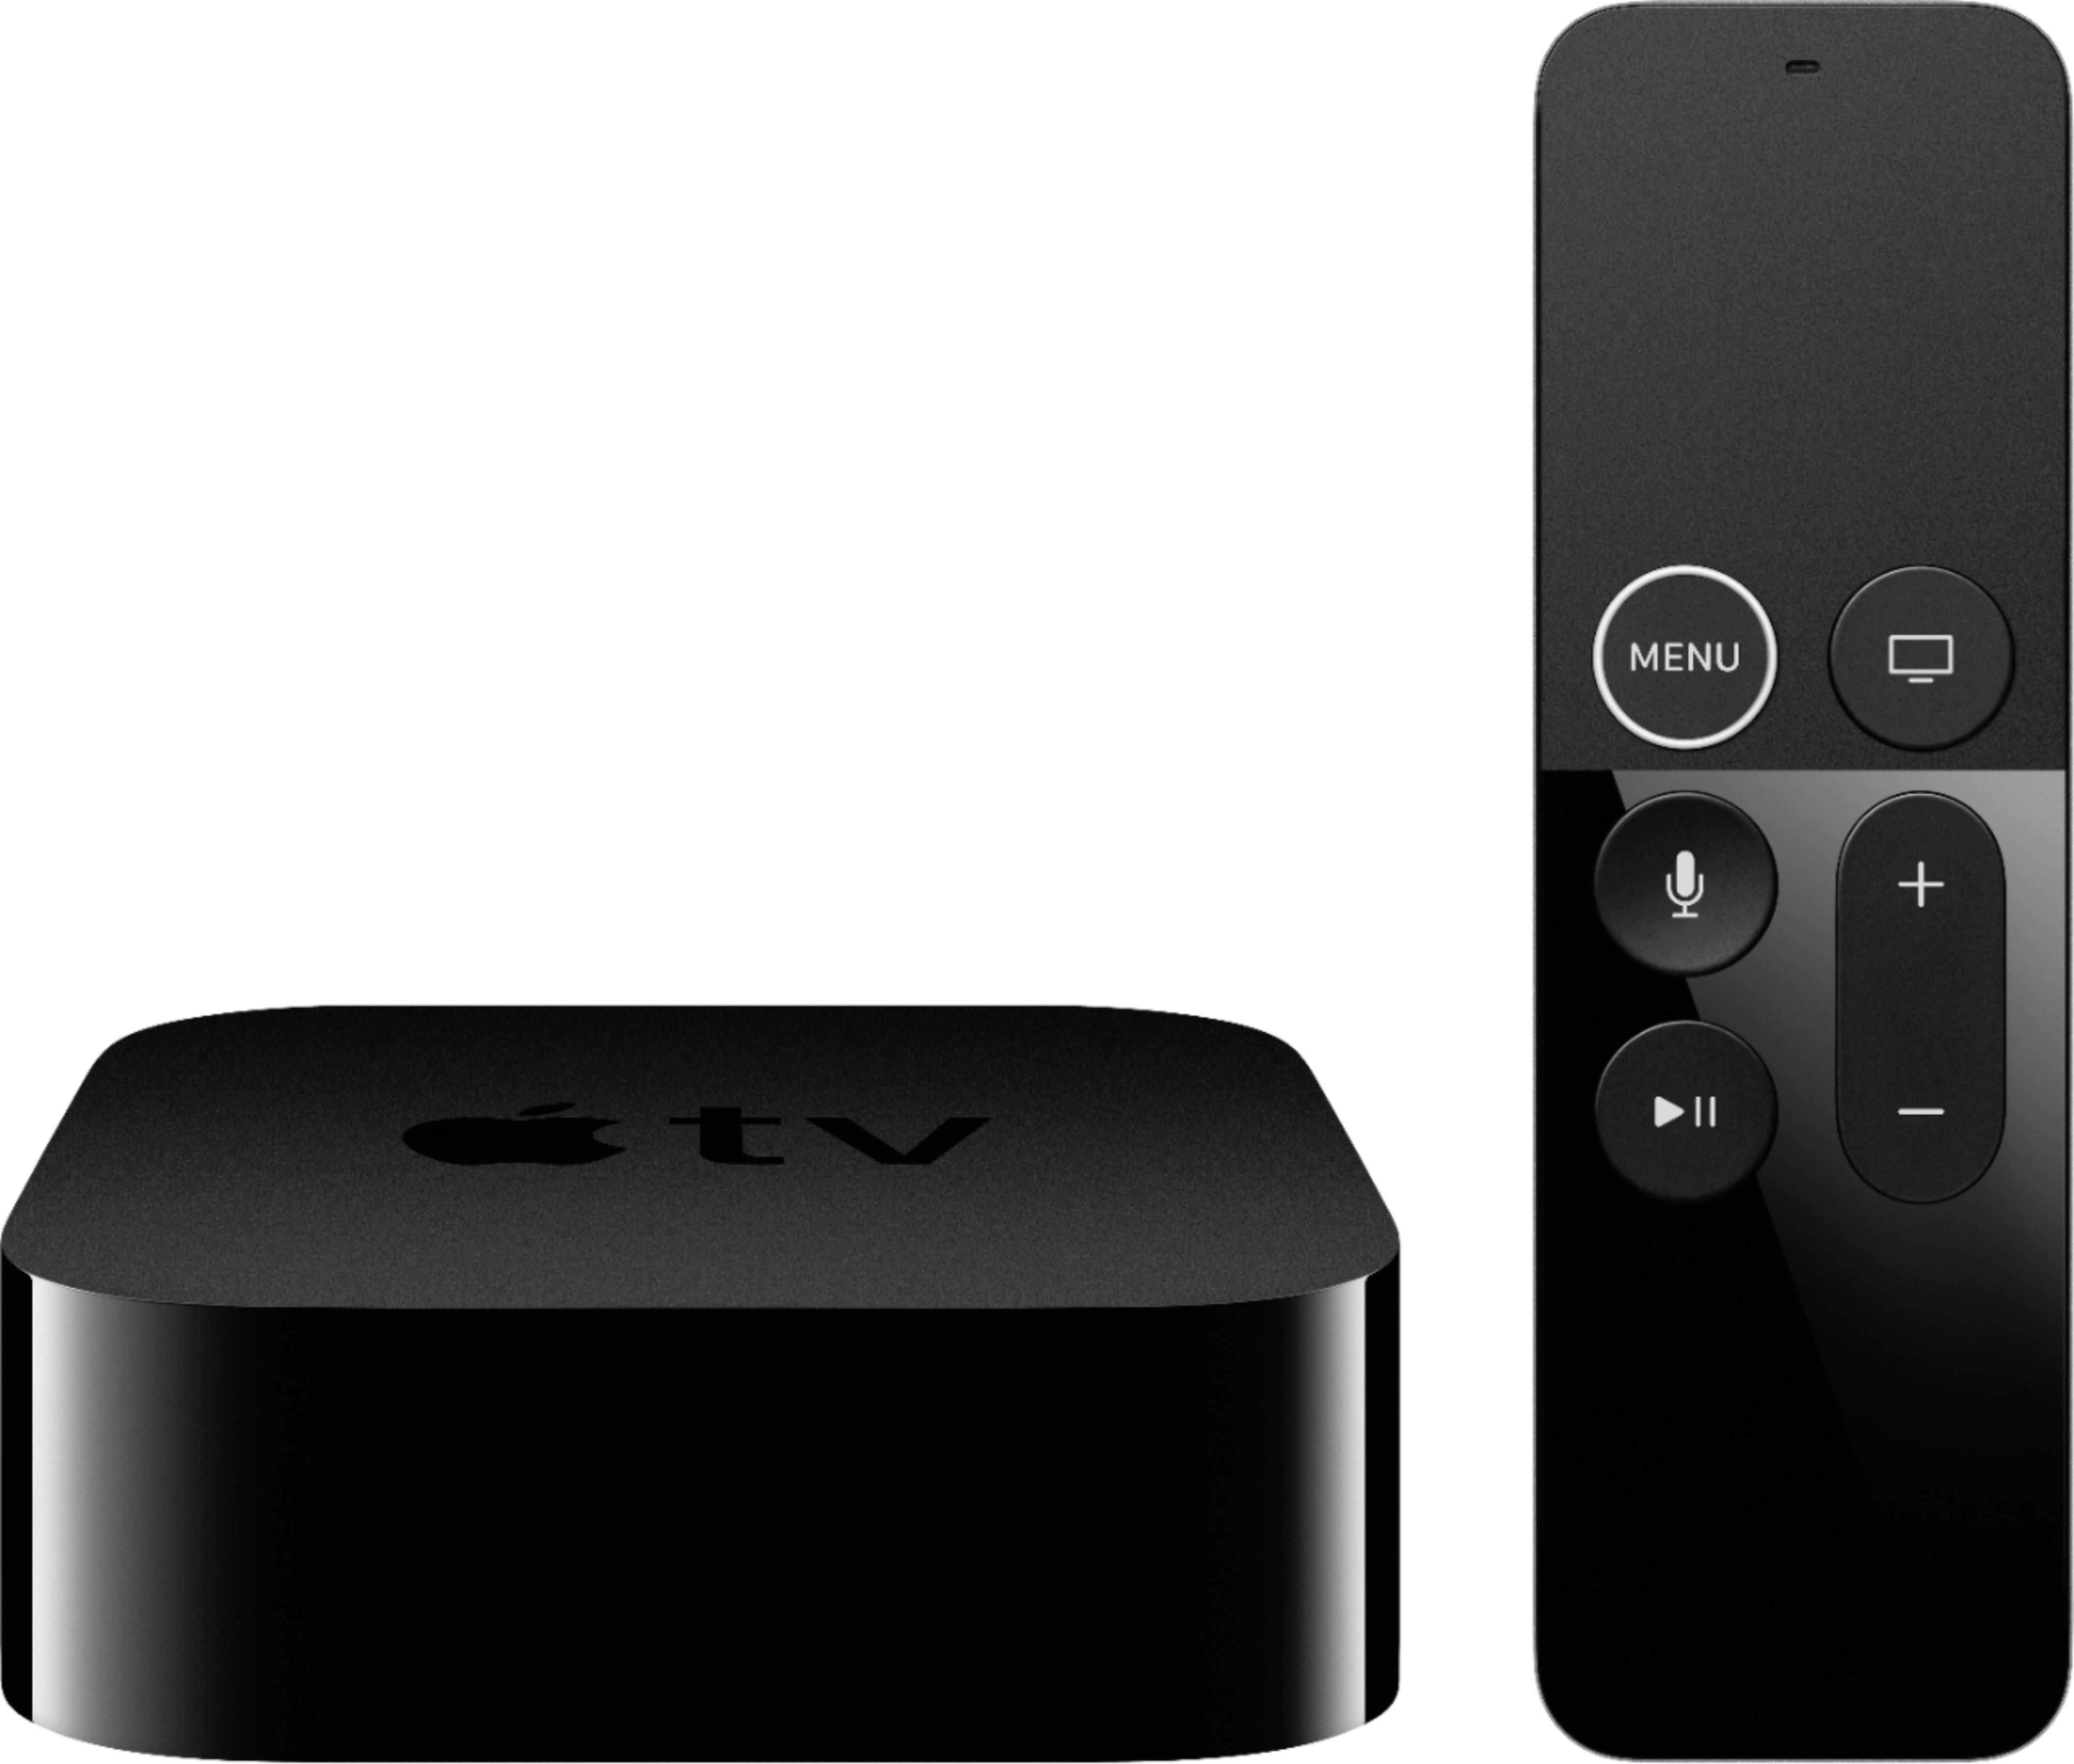 Apple TV HD 32GB Black MR912LL/A - Best Buy